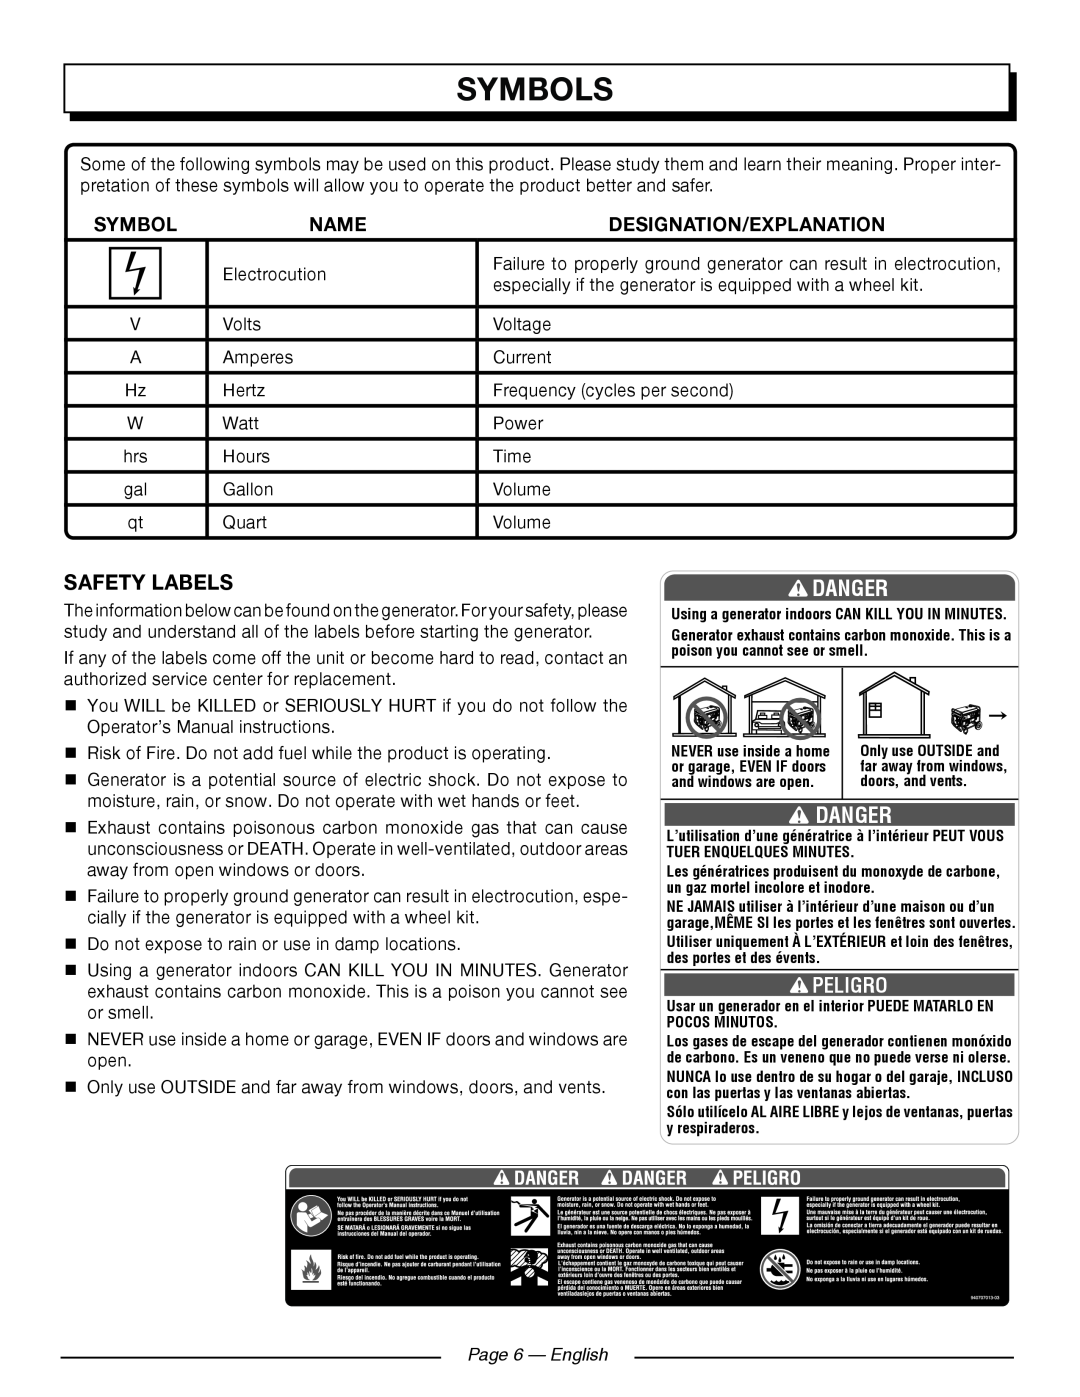 Homelite HGCA5000 Safety Labels, Danger, Peligro, Page 6 - English, Symbols, Name, Designation/Explanation 